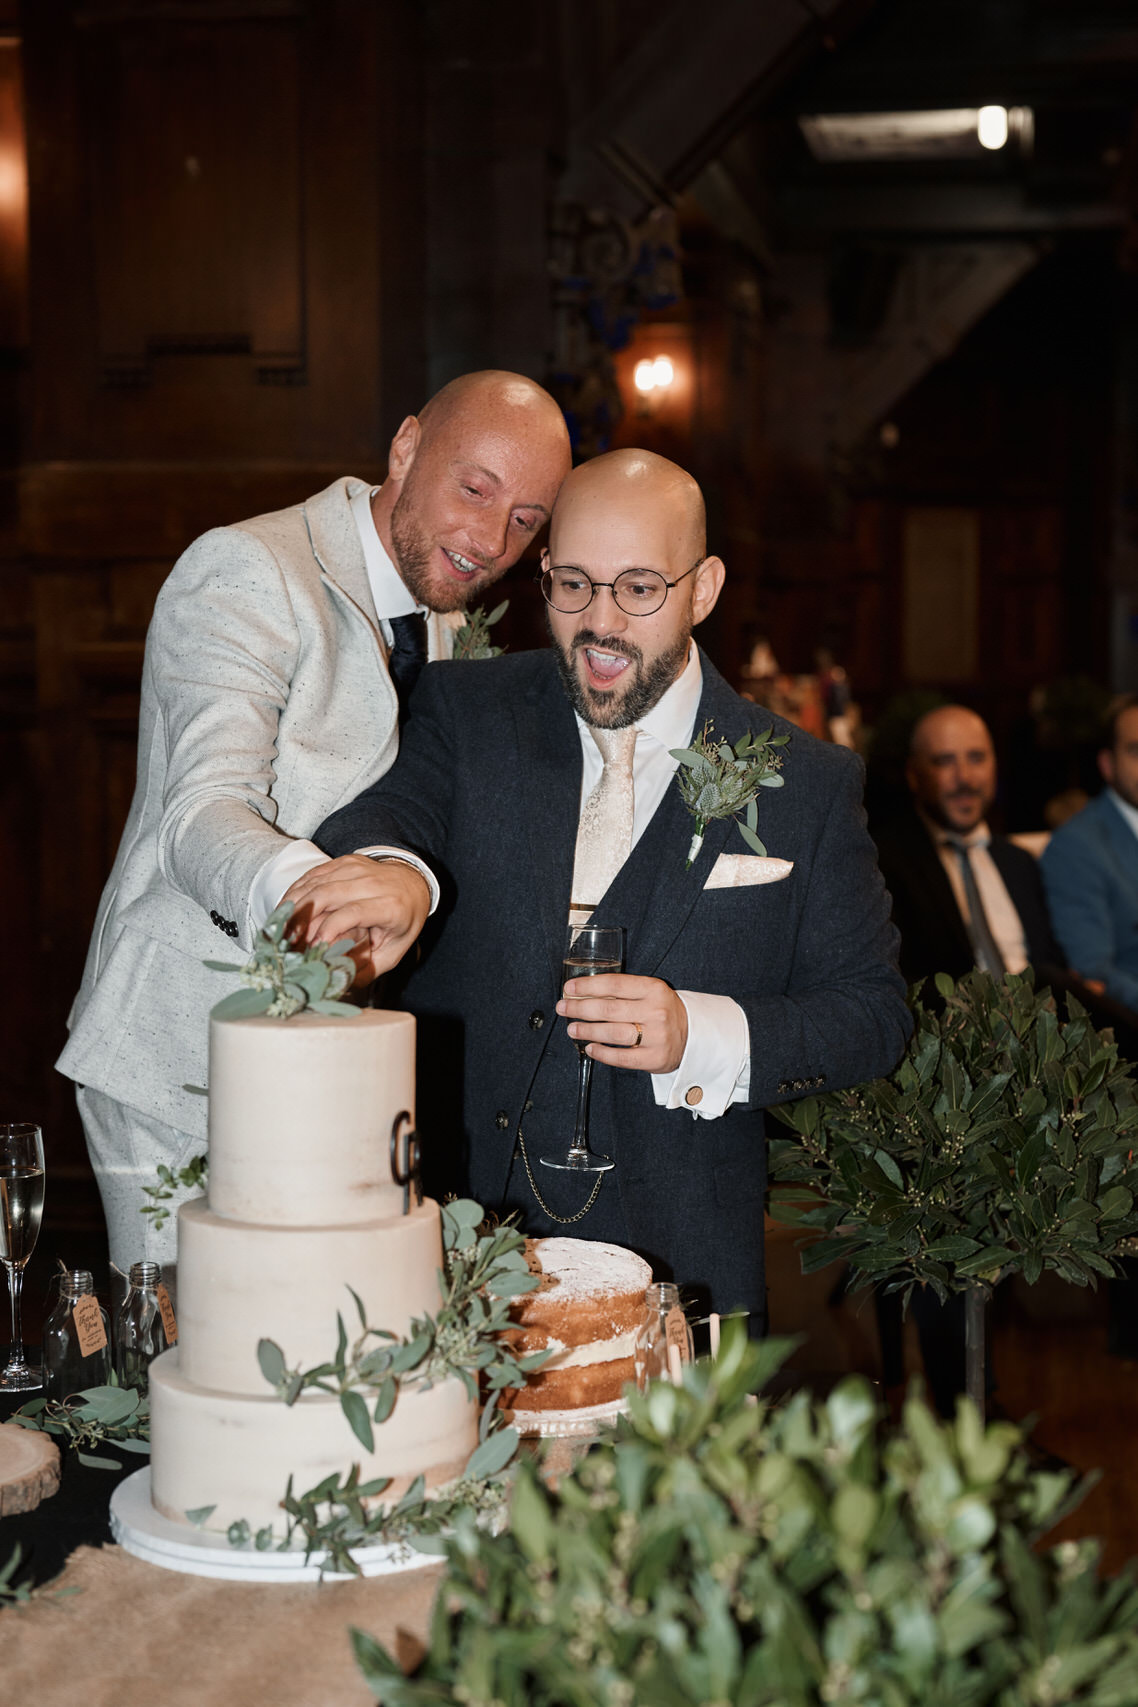 Two guys slicing a wedding cake.